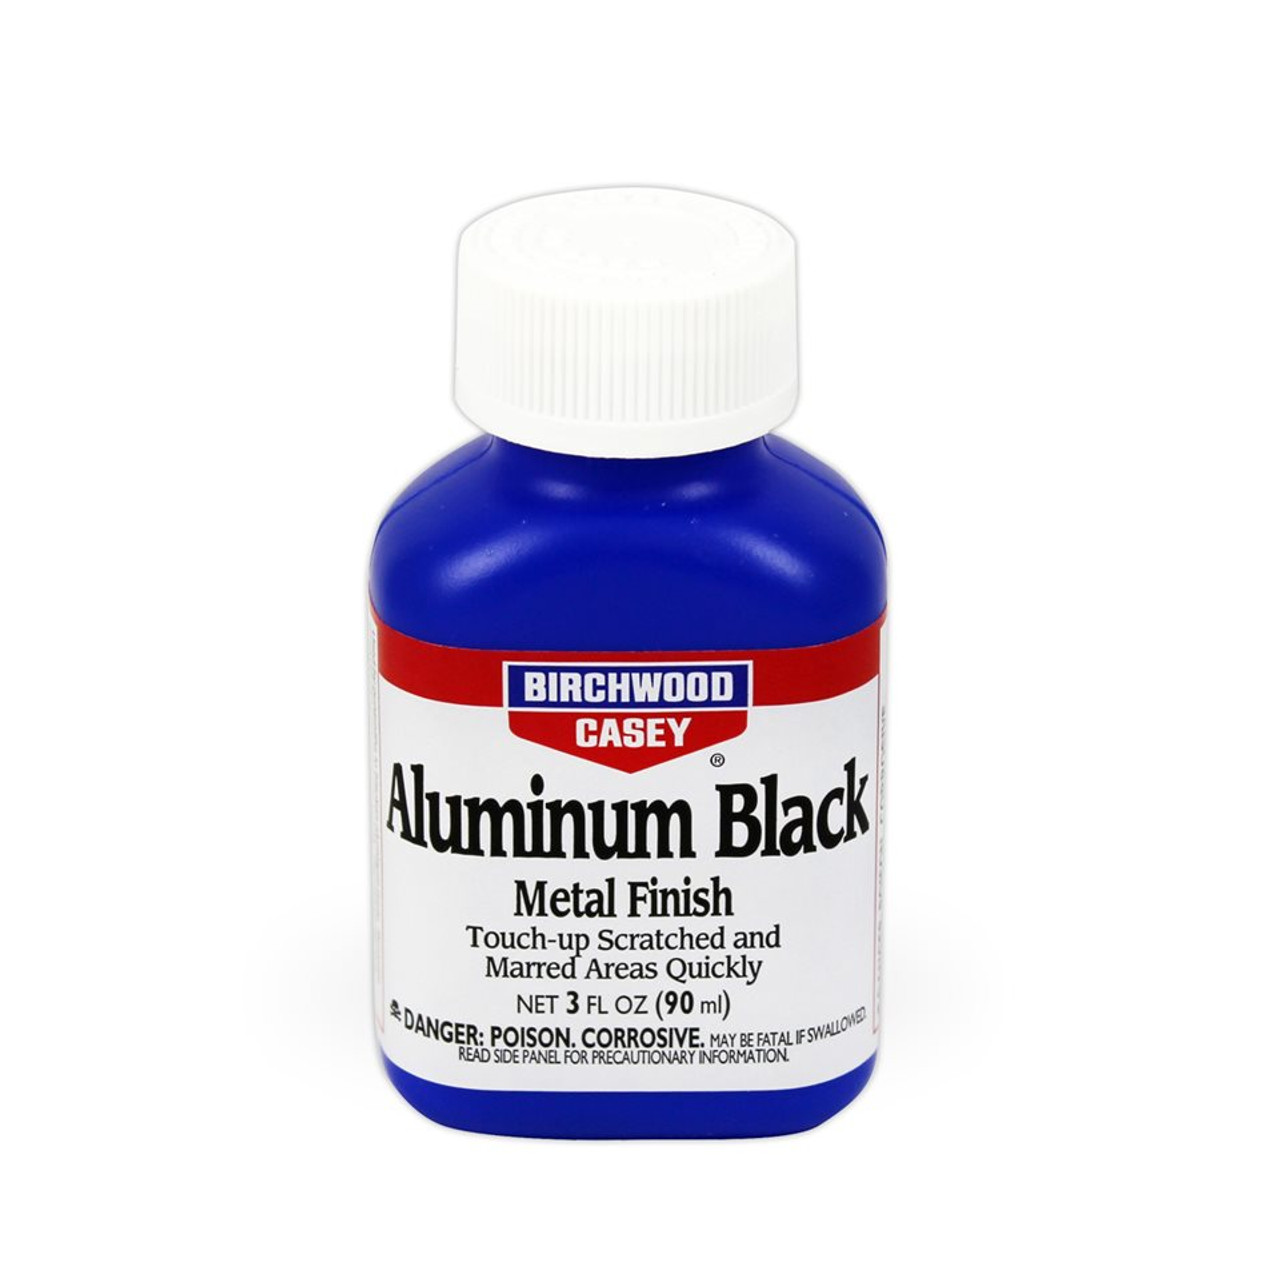 Birchwood Casey Aluminum Black Metal Finish, 3 fl. oz. Bottle - Shooting Accessories